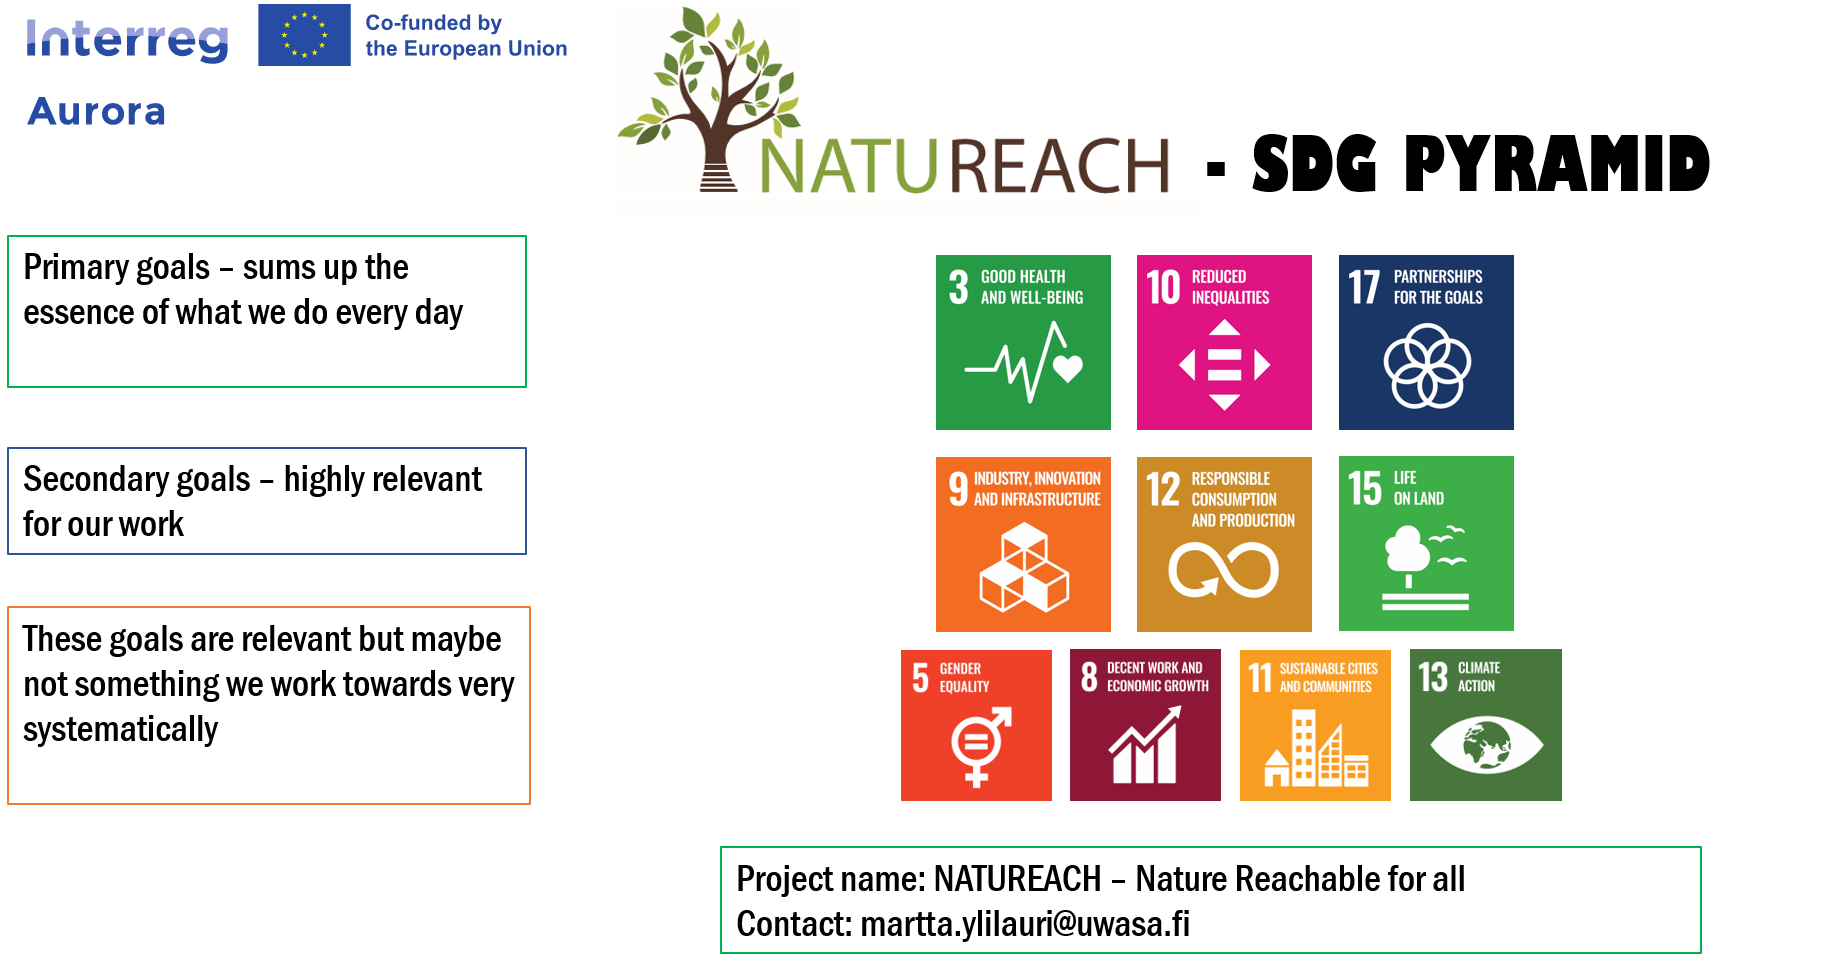 SDG pyramide Natureach project